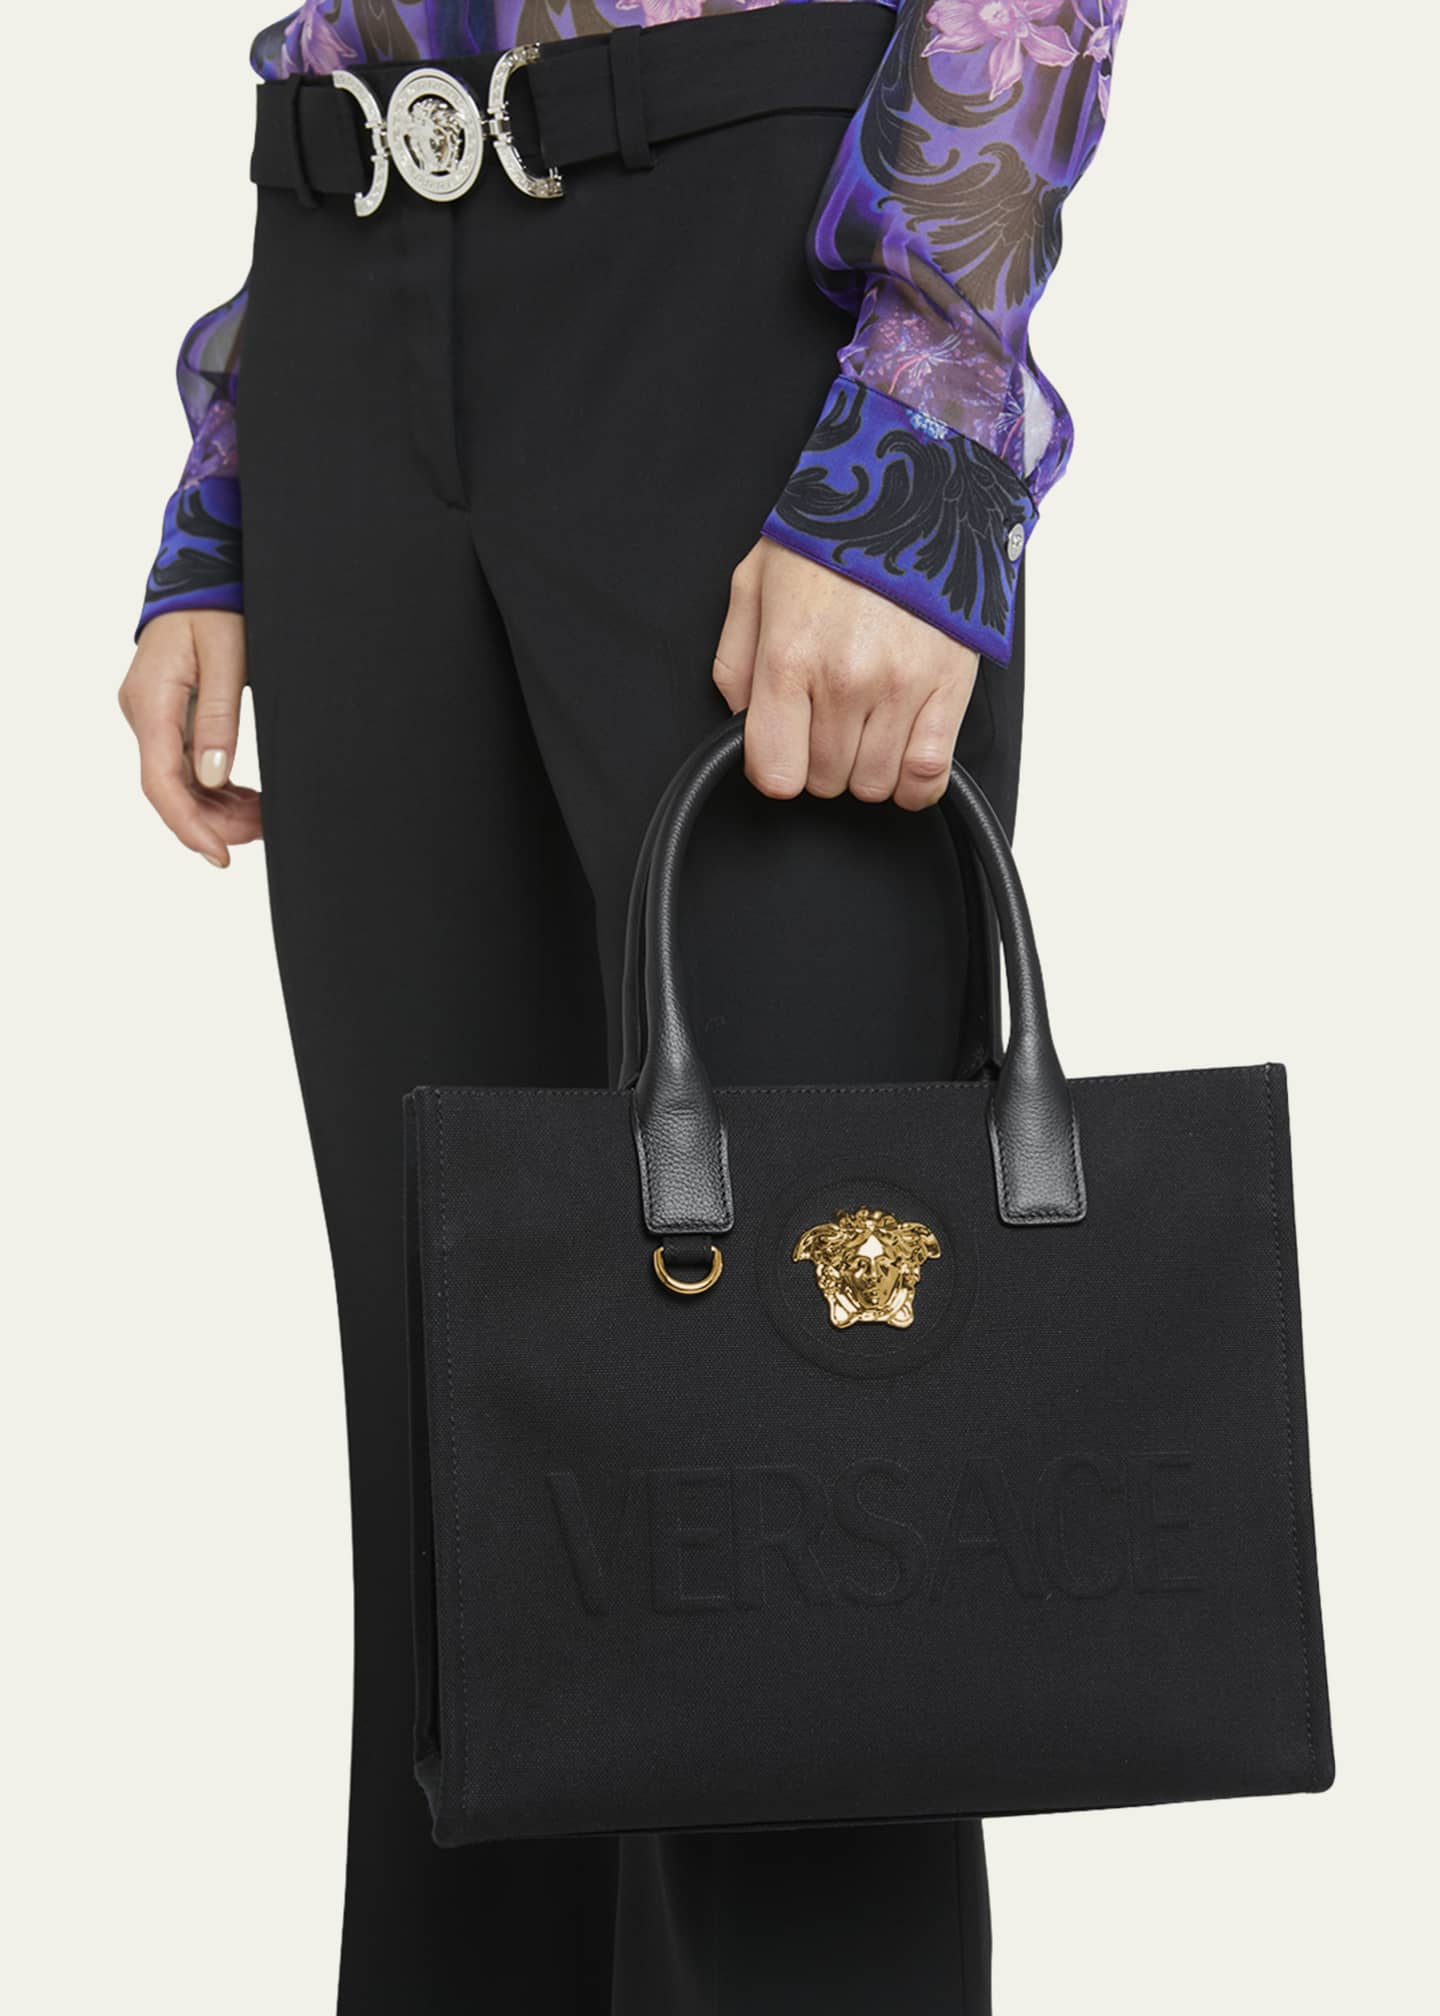 Versace Medusa Tote Bag